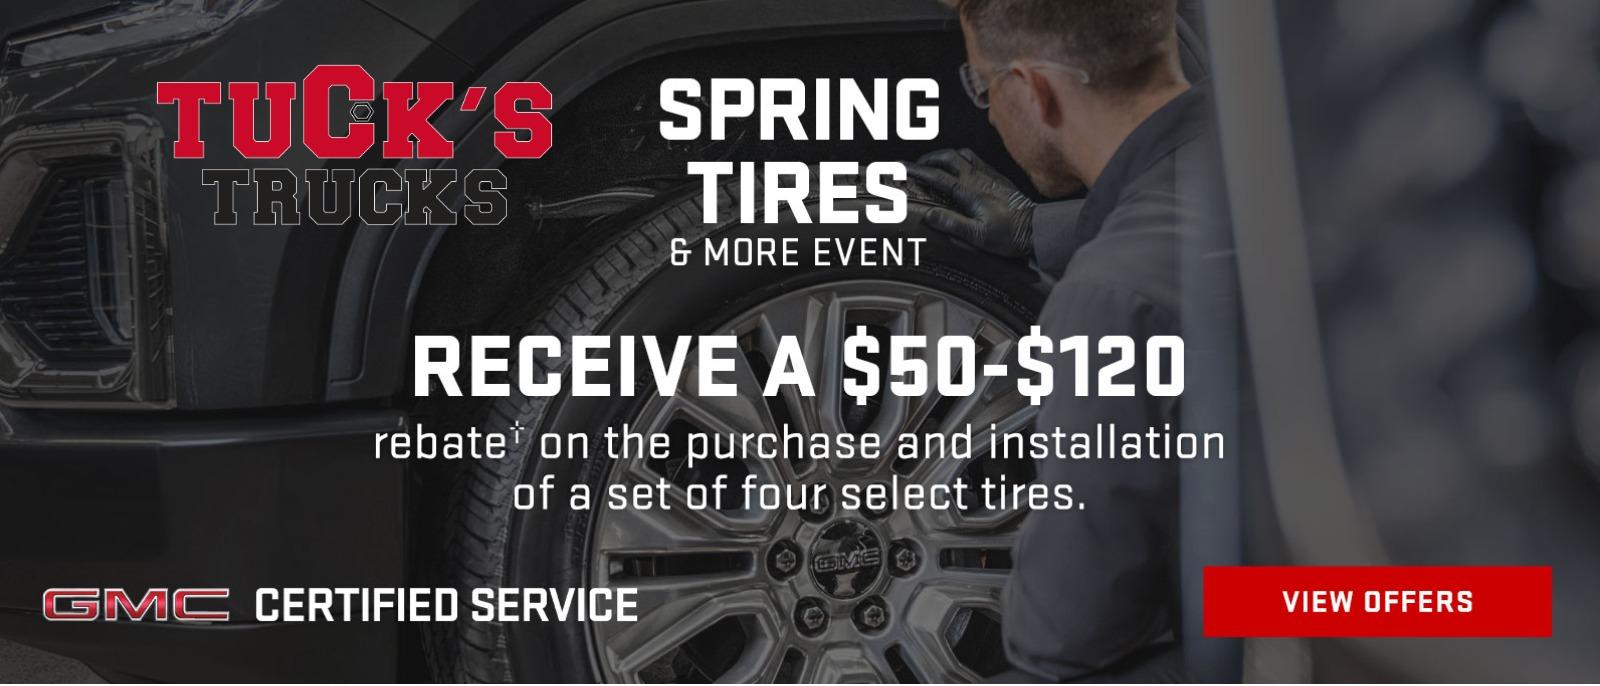 May Spring Tire Rebates $5 - $120